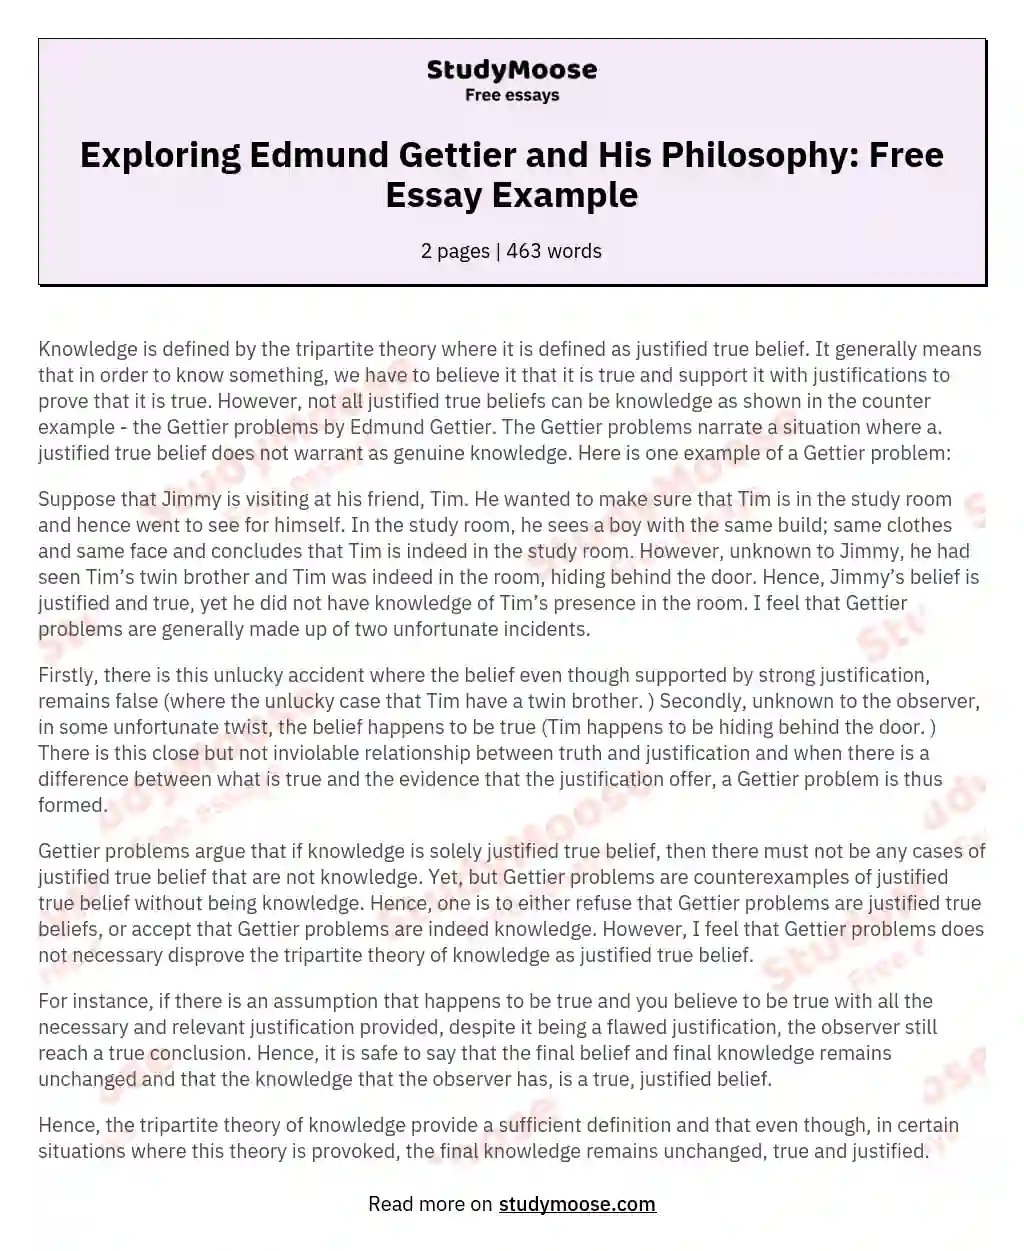 Exploring Edmund Gettier and His Philosophy: Free Essay Example essay